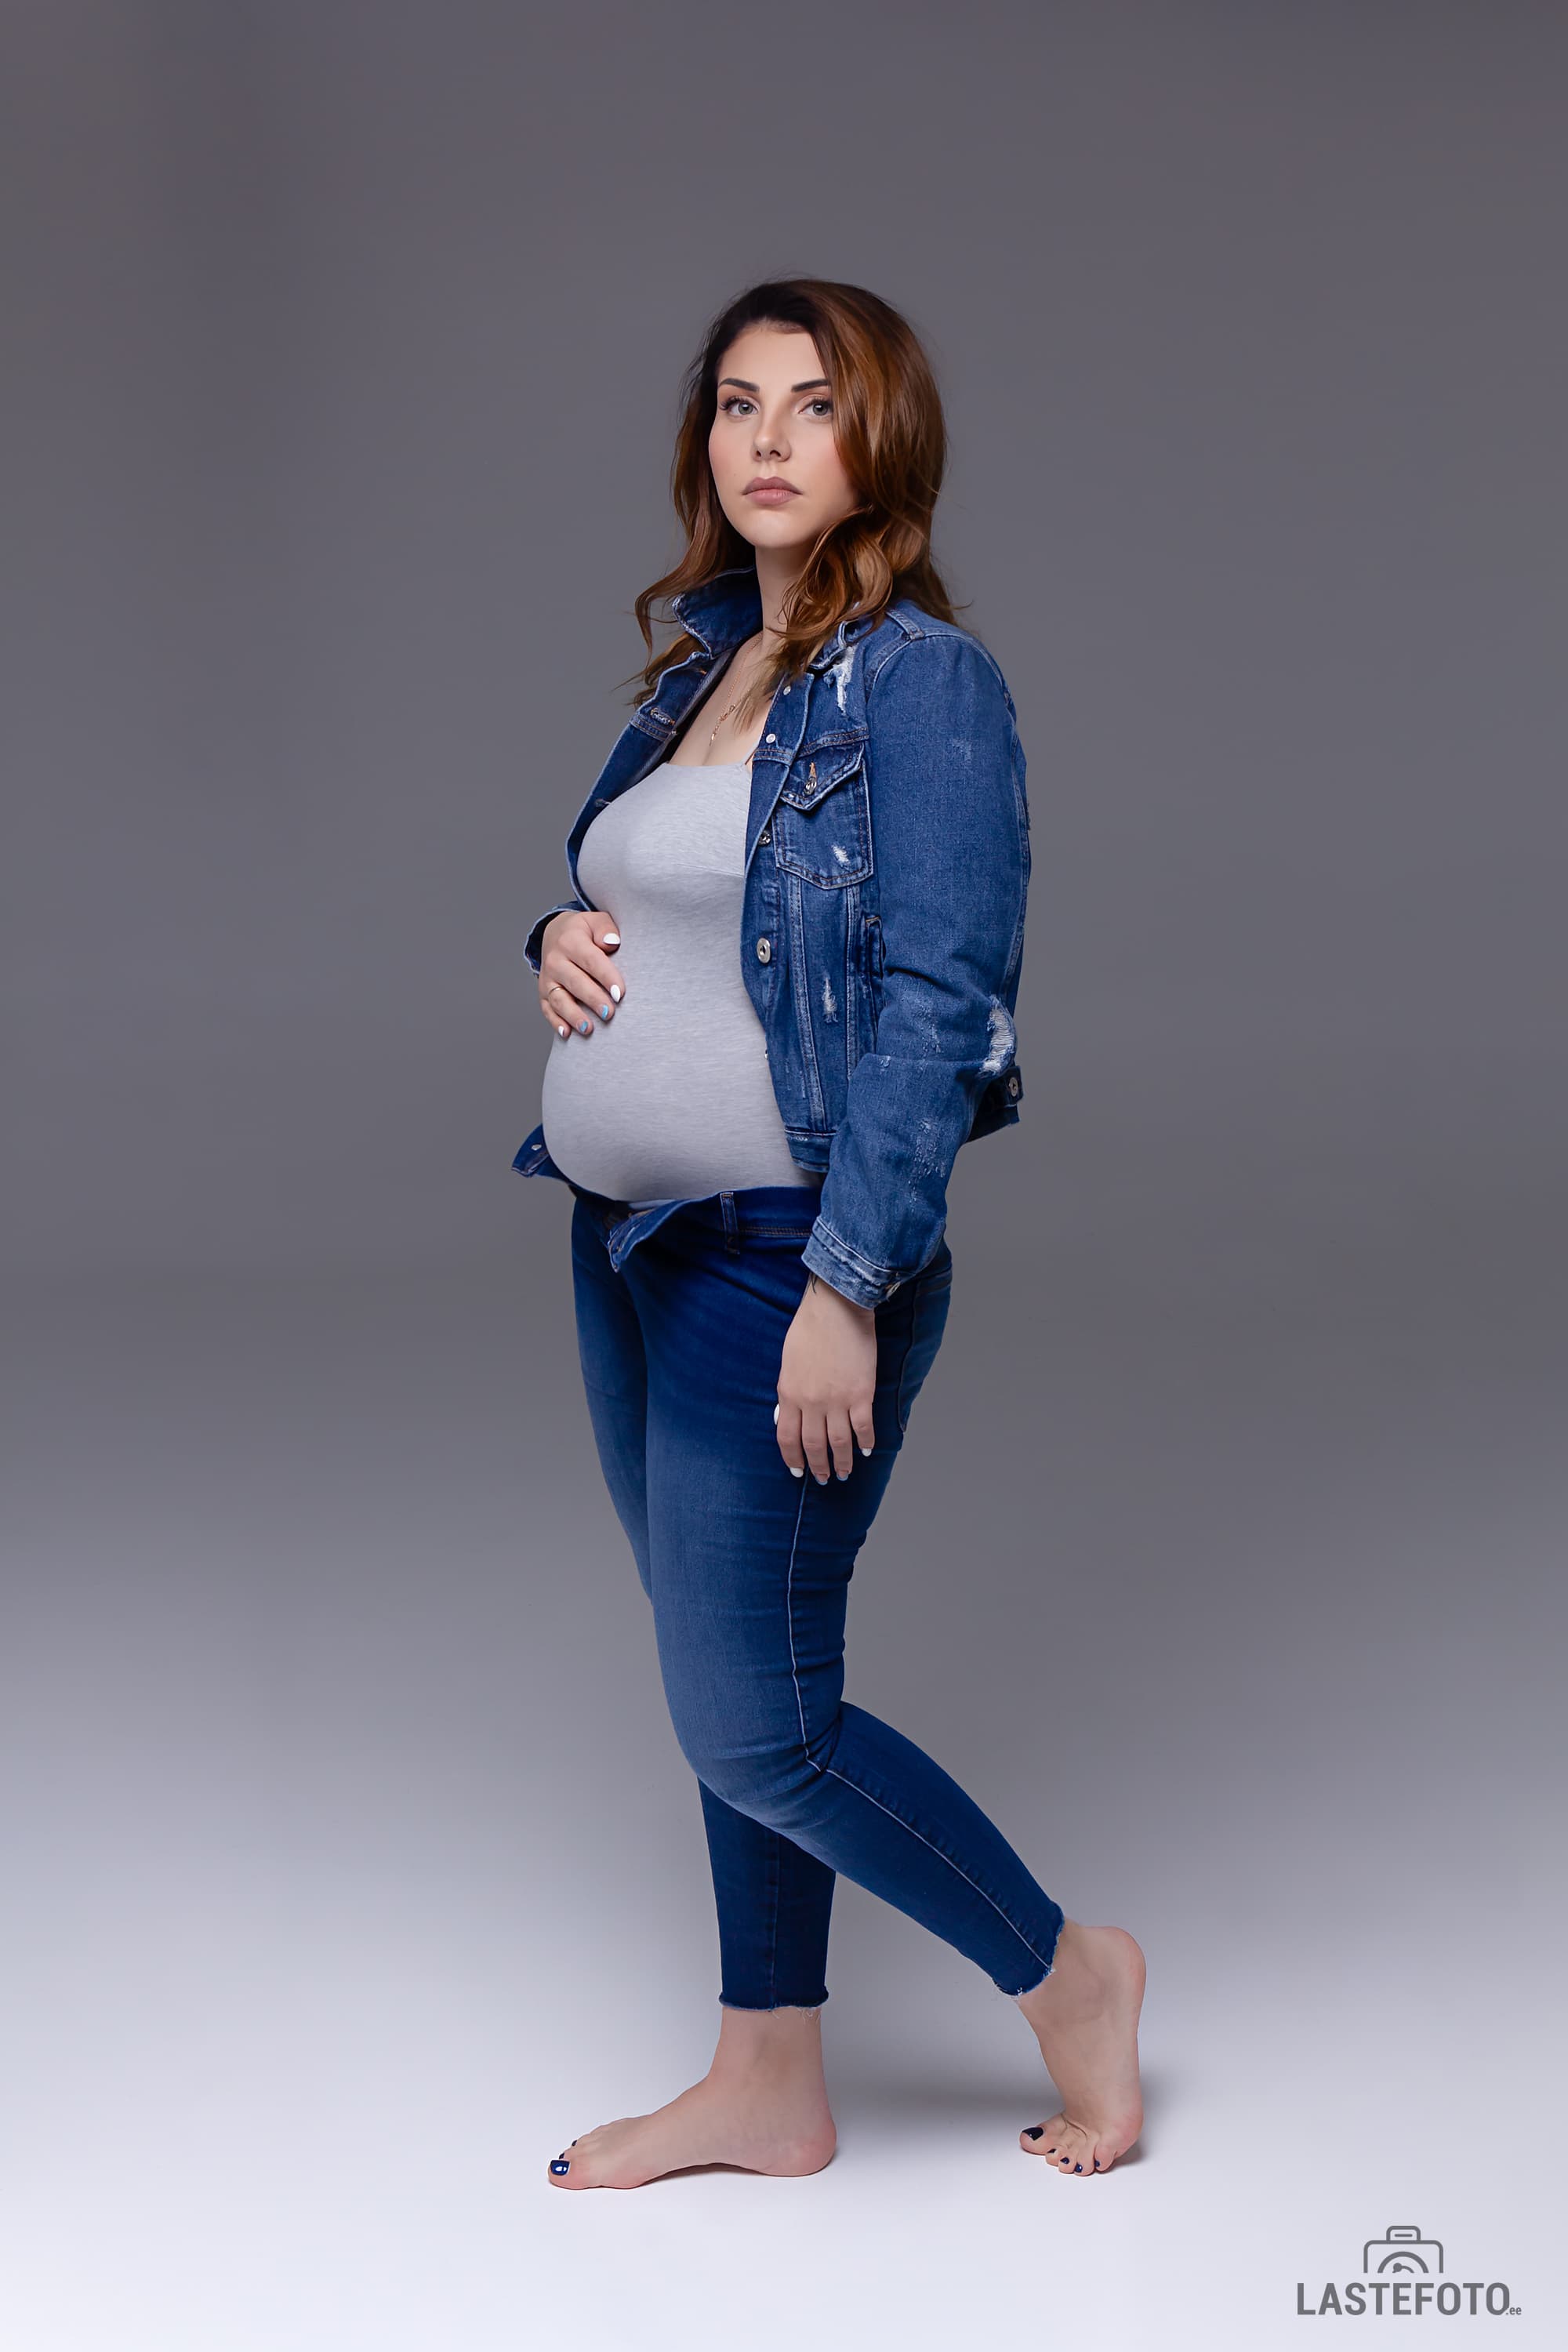 pregnancy photo shoot in Vogue style in Tallinn